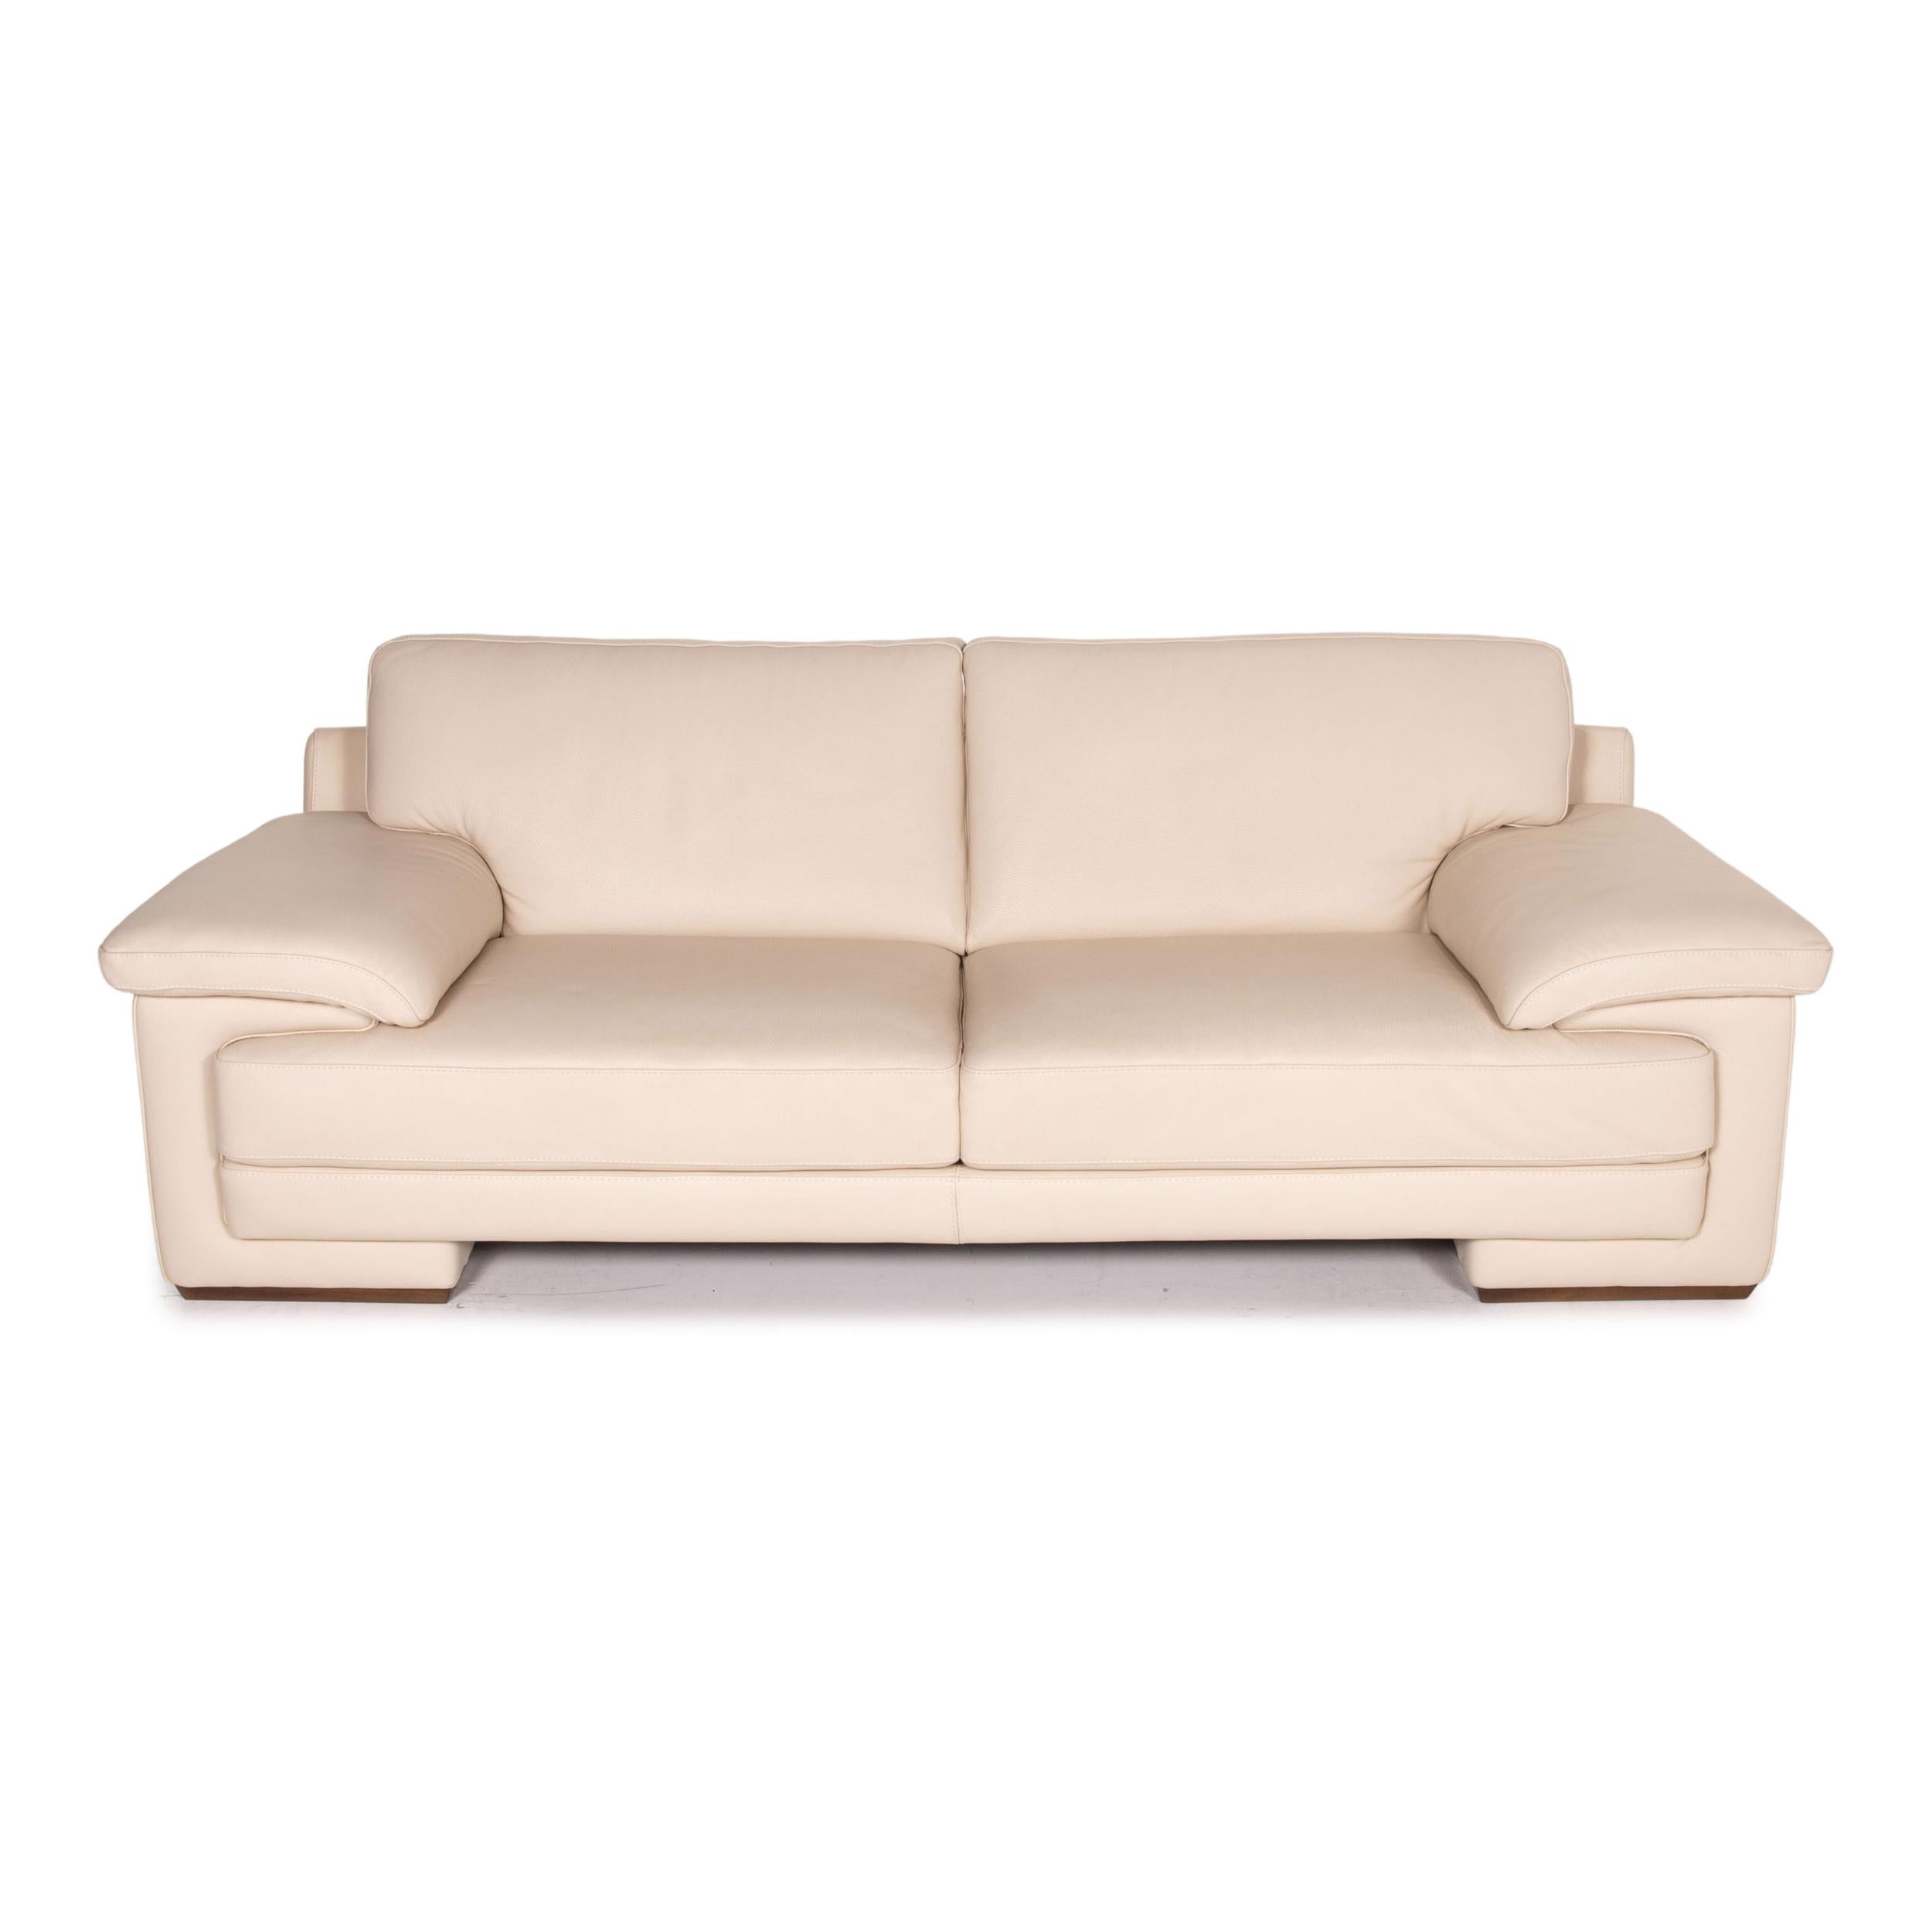 Italian Natuzzi 2198 Leather Sofa Cream Three-Seater Couch